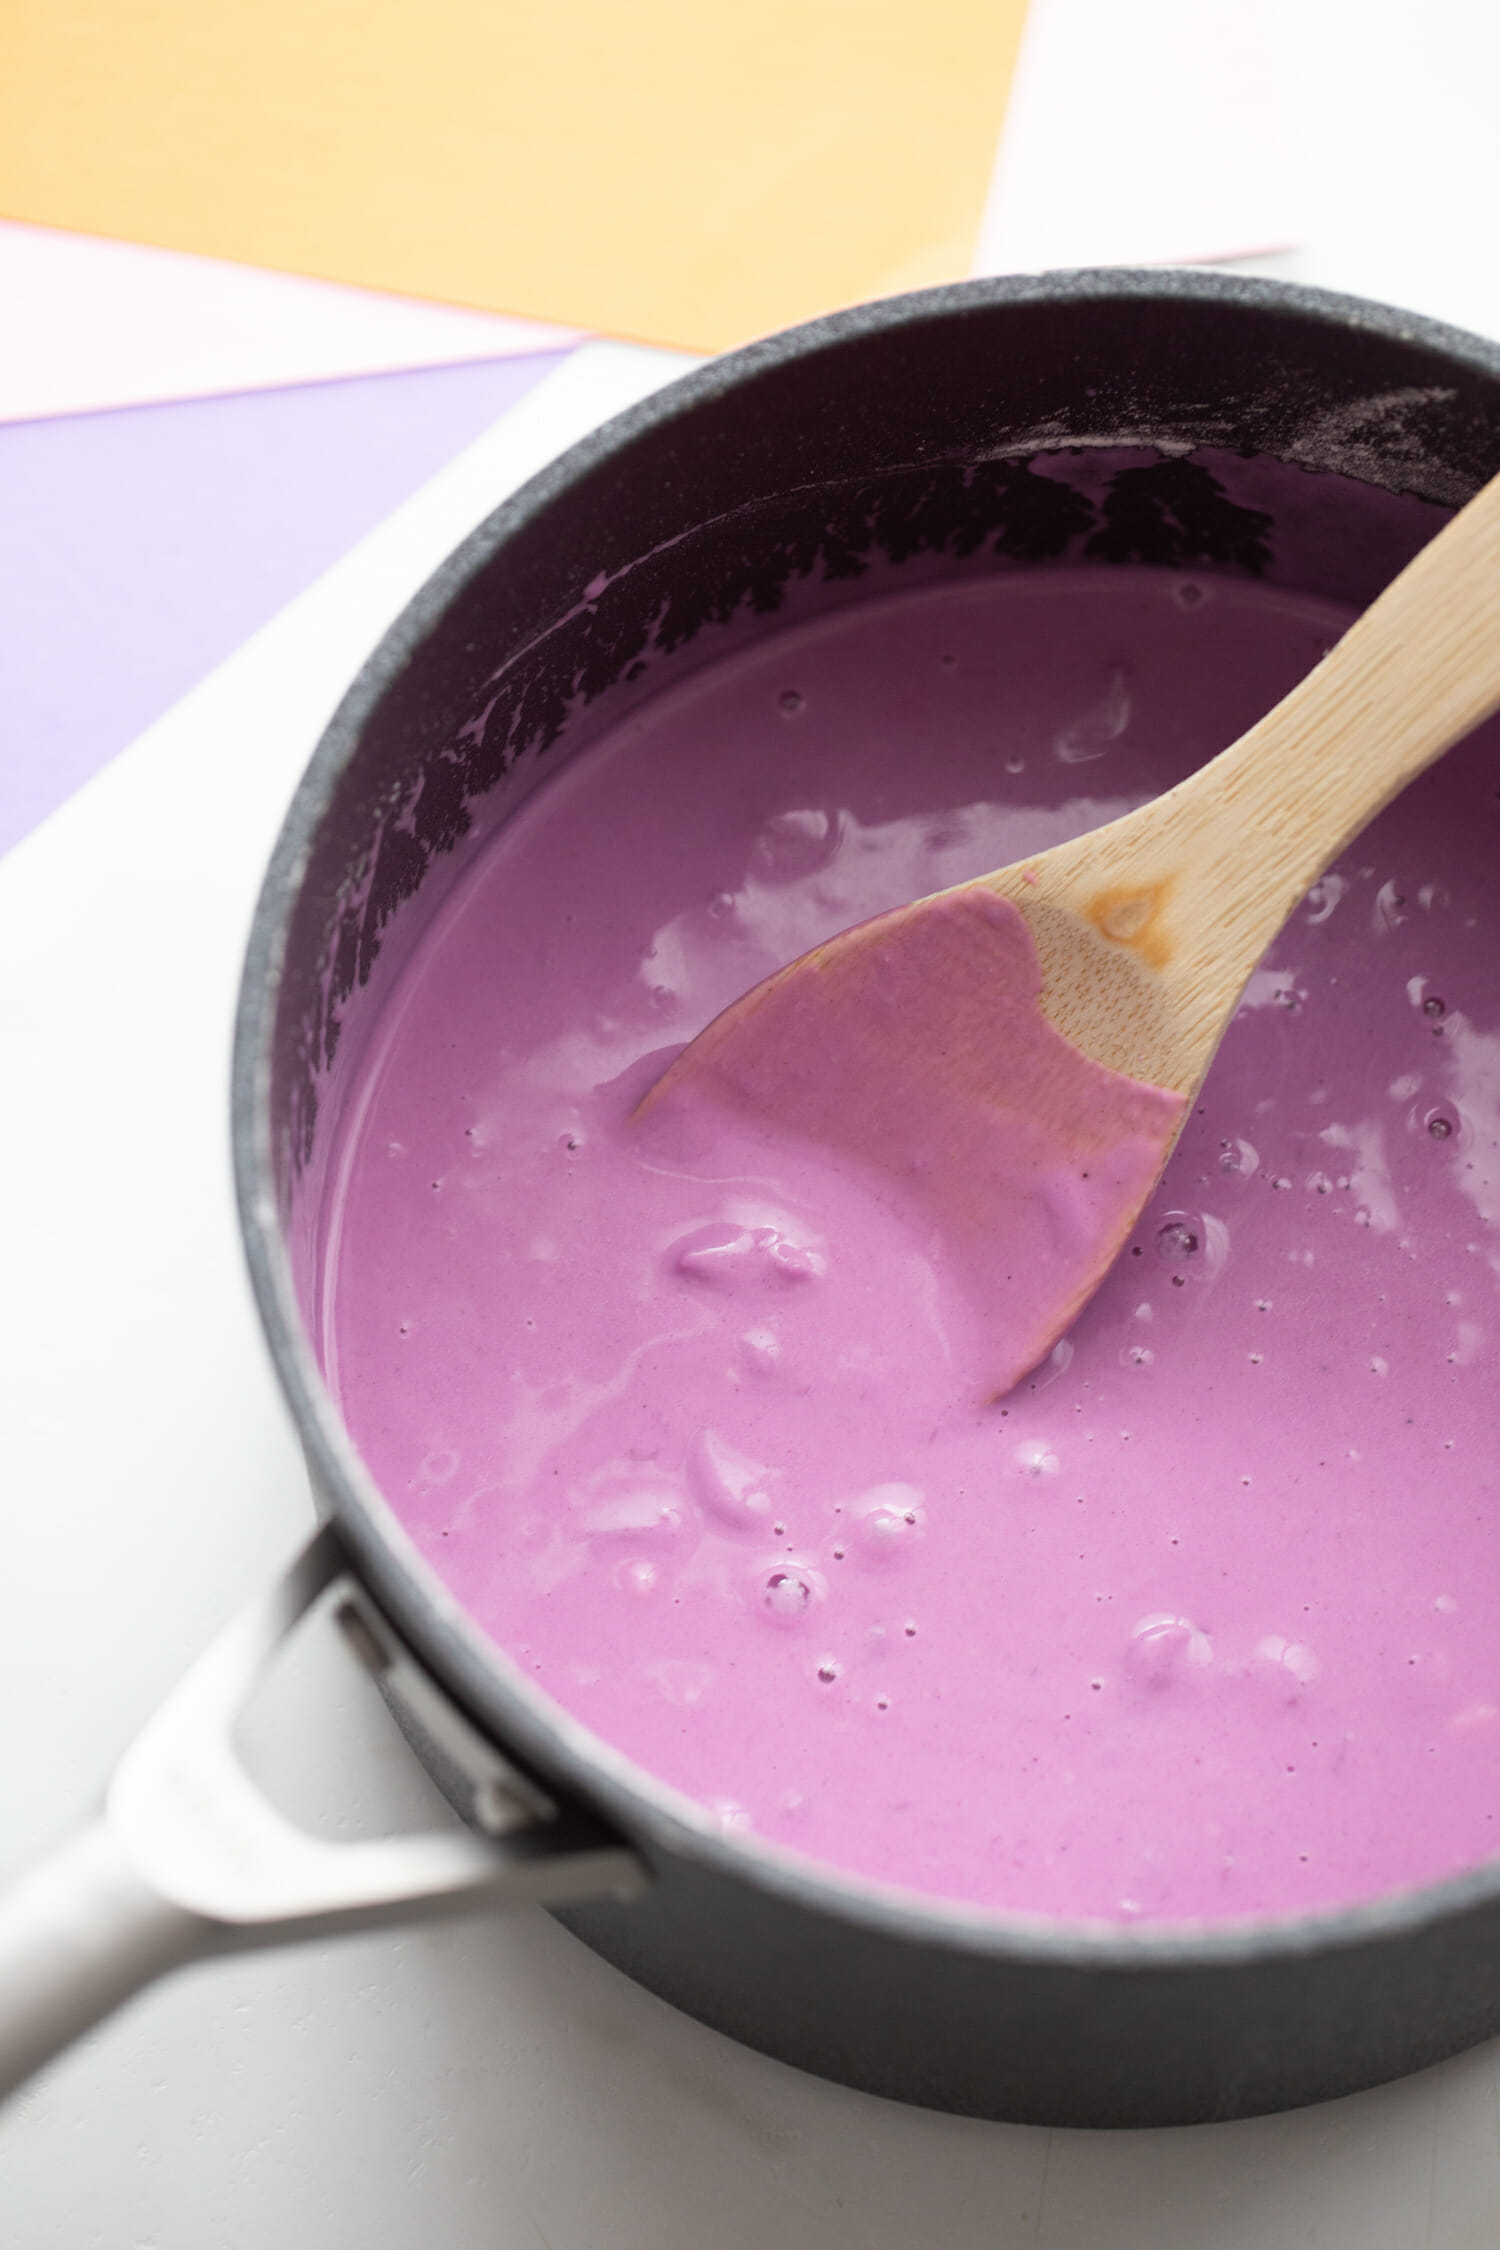 Wooden spoon mixing purple playdough ingredients in a pot.